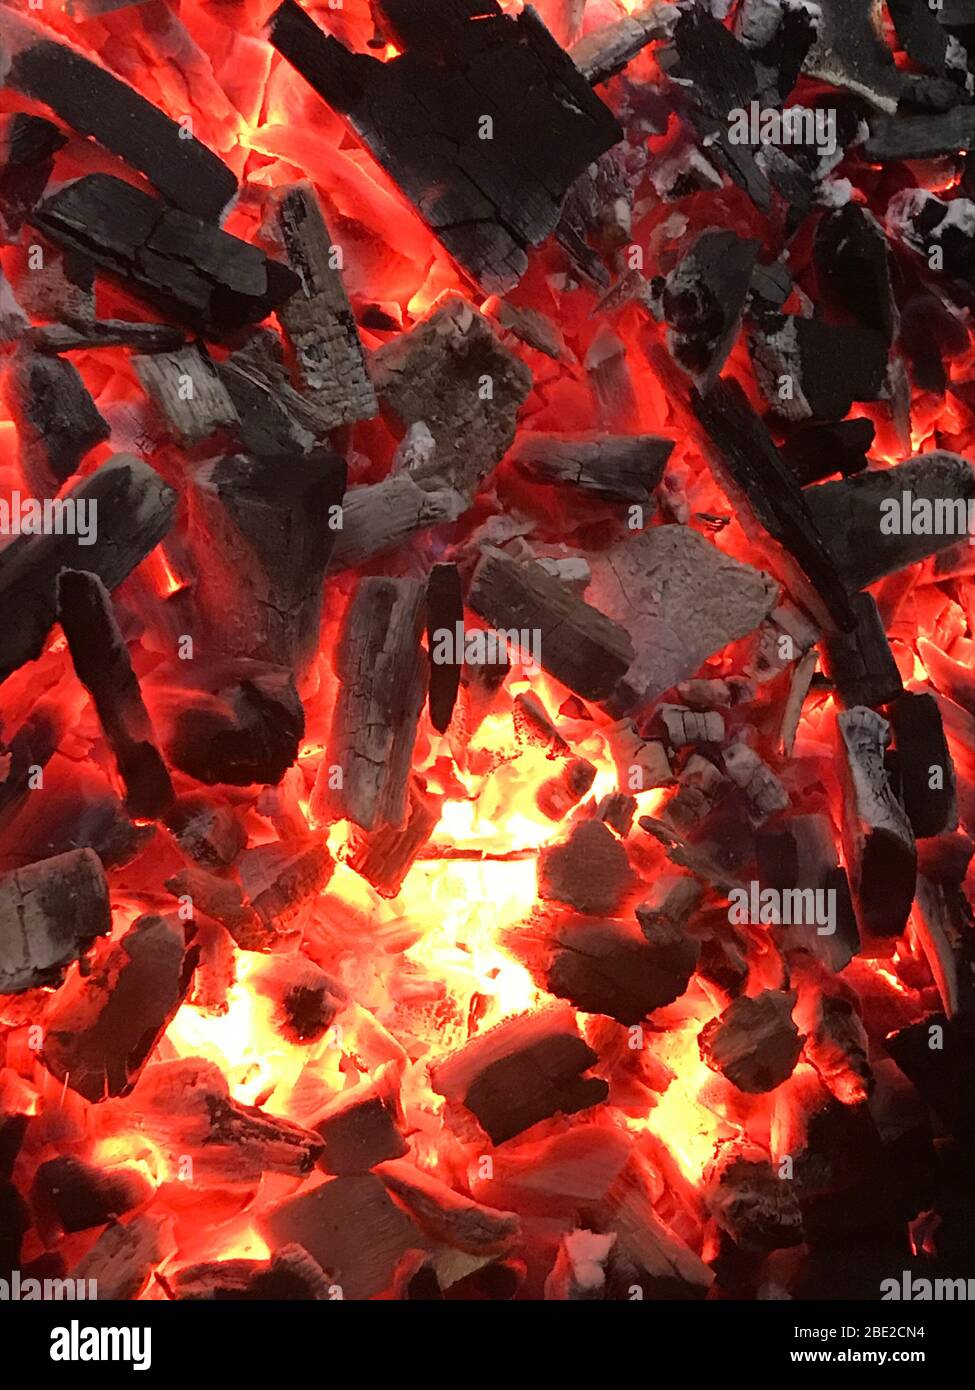 KohlenseibenKamin mit glühender Kohle. Kohleverbrennung. Glühende Kohlen in einem Grill Stockfoto